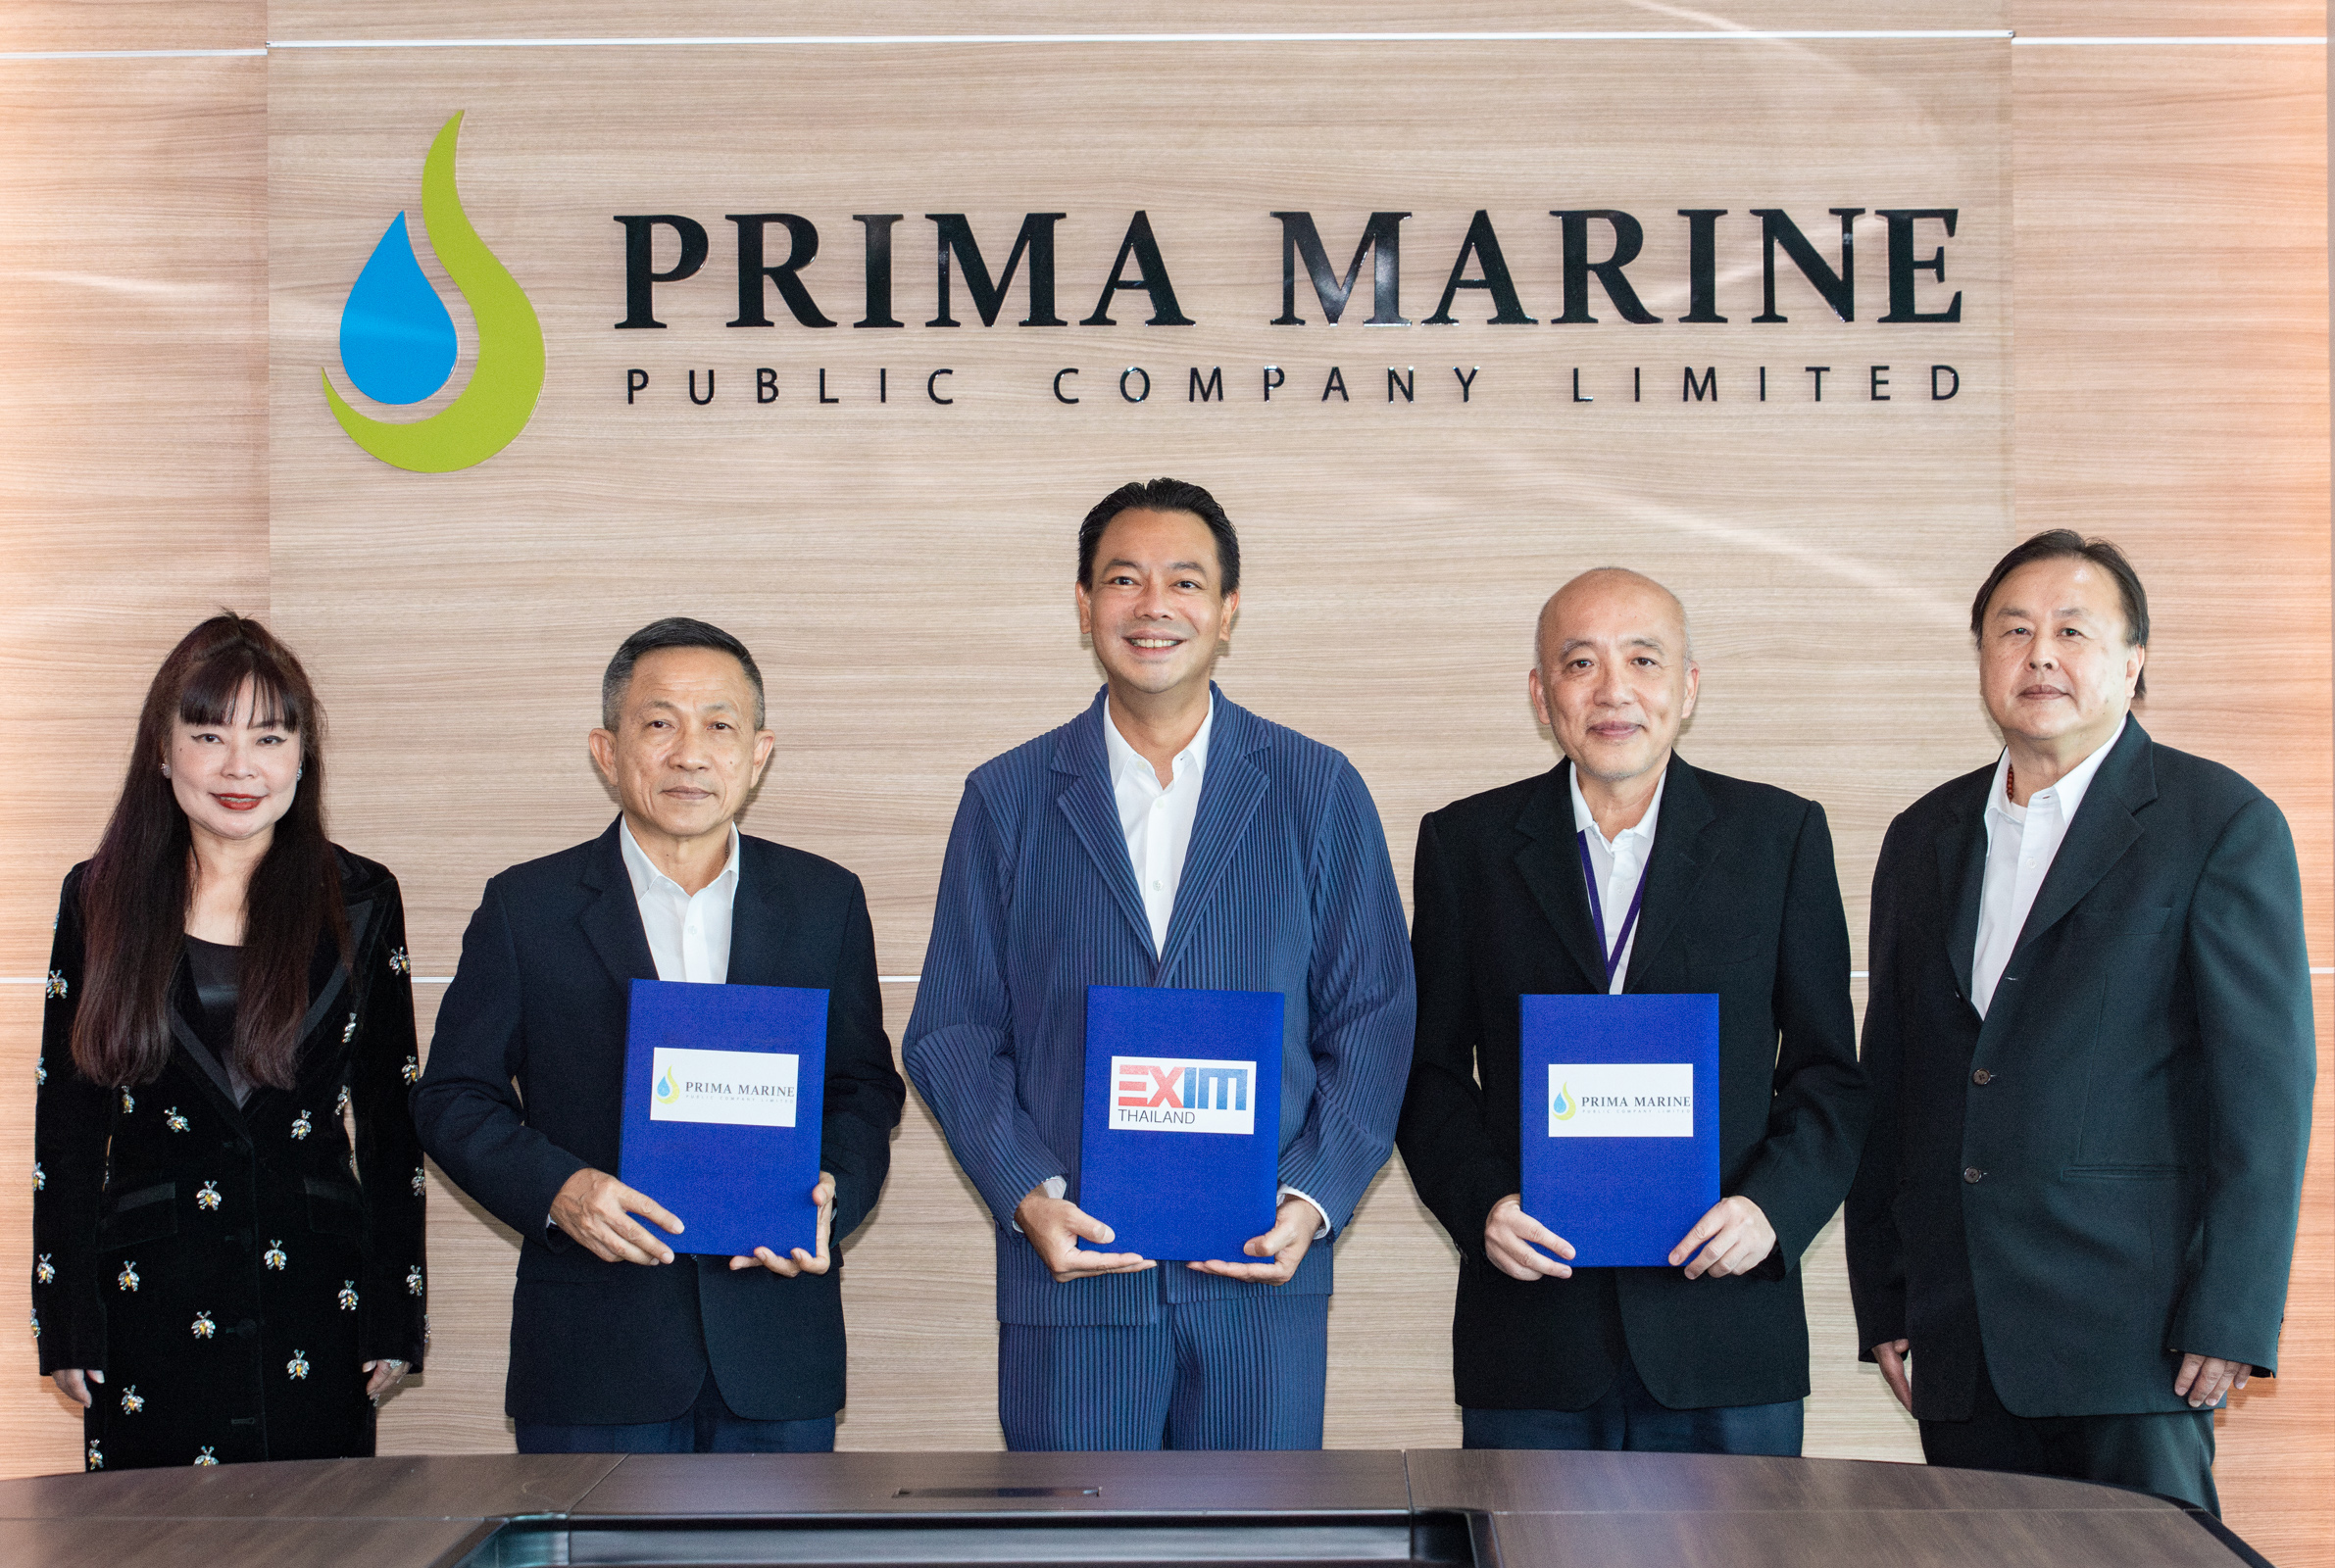 EXIM Thailand Finances Prima Marine Group to Build Green Merchant Marine and Drive Blue Economy Development